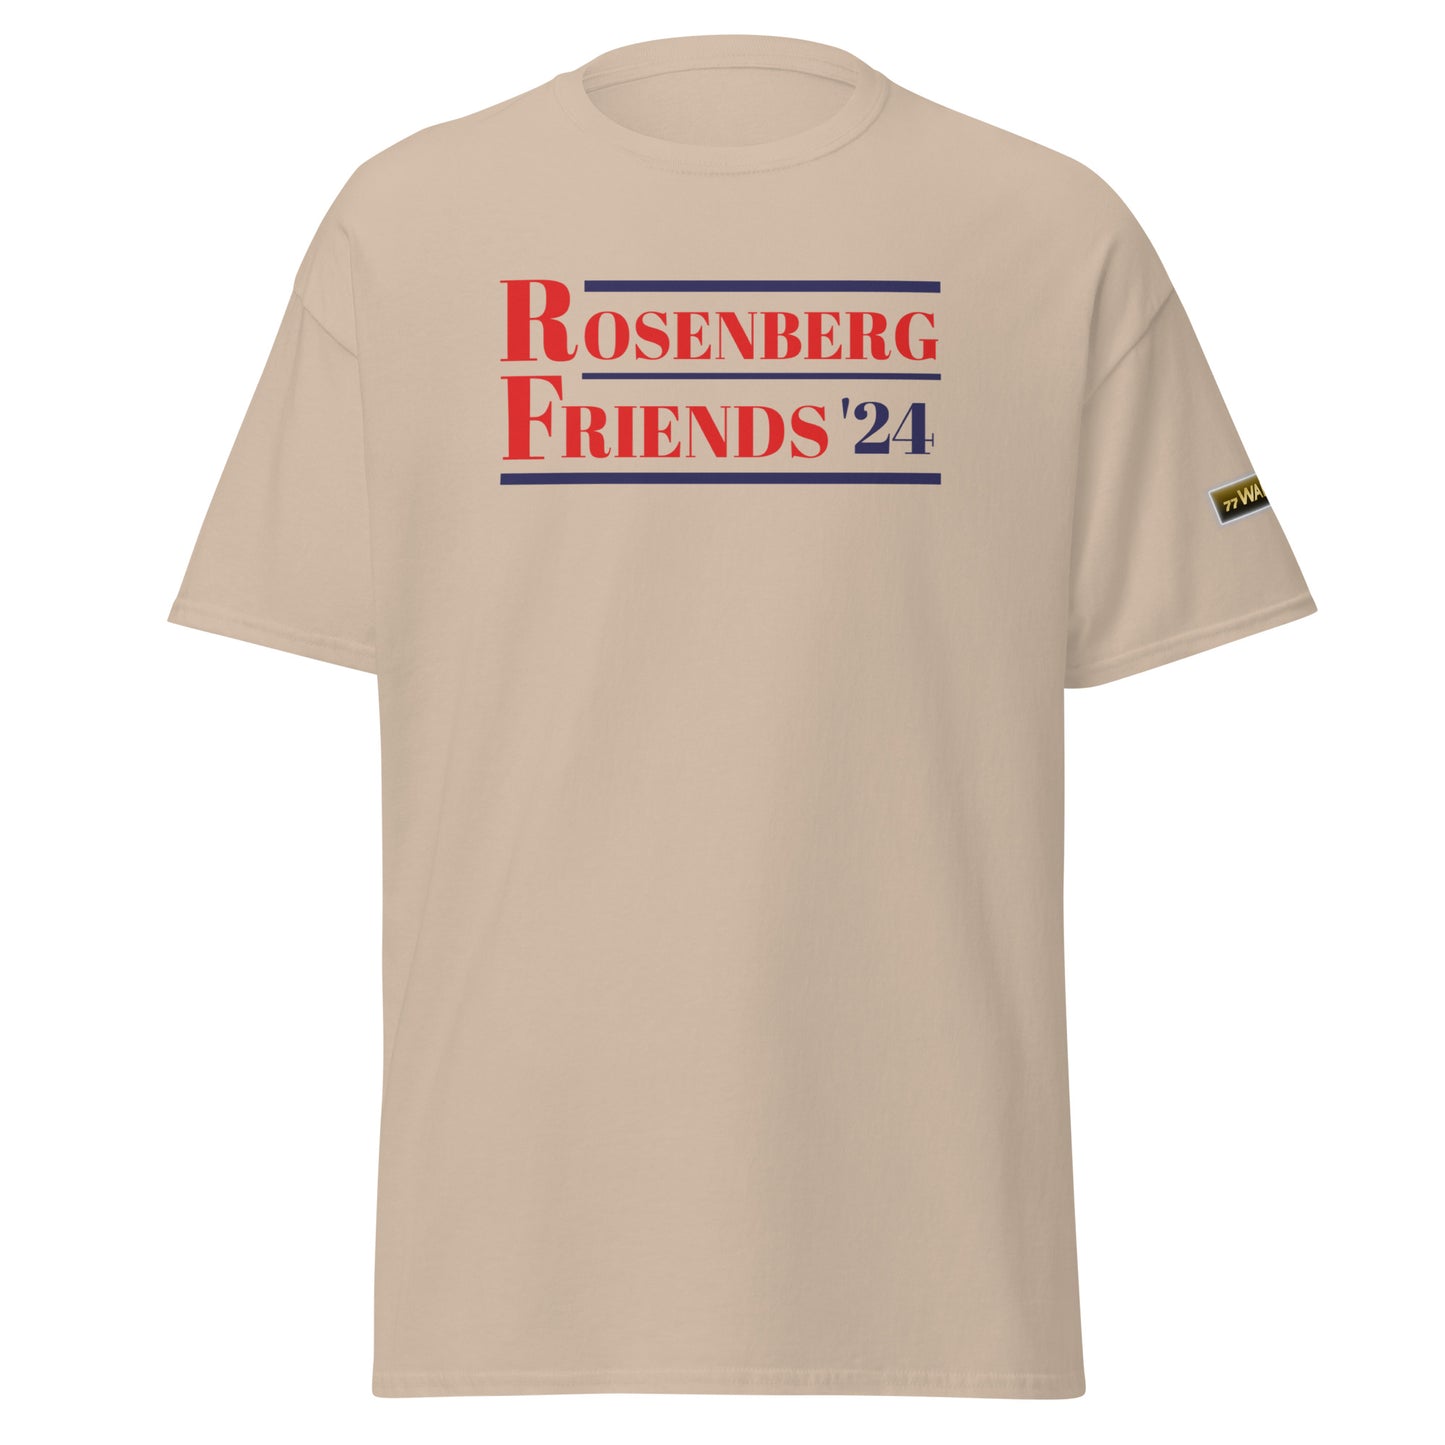 Rosenberg - Friends '24 Men's classic tee